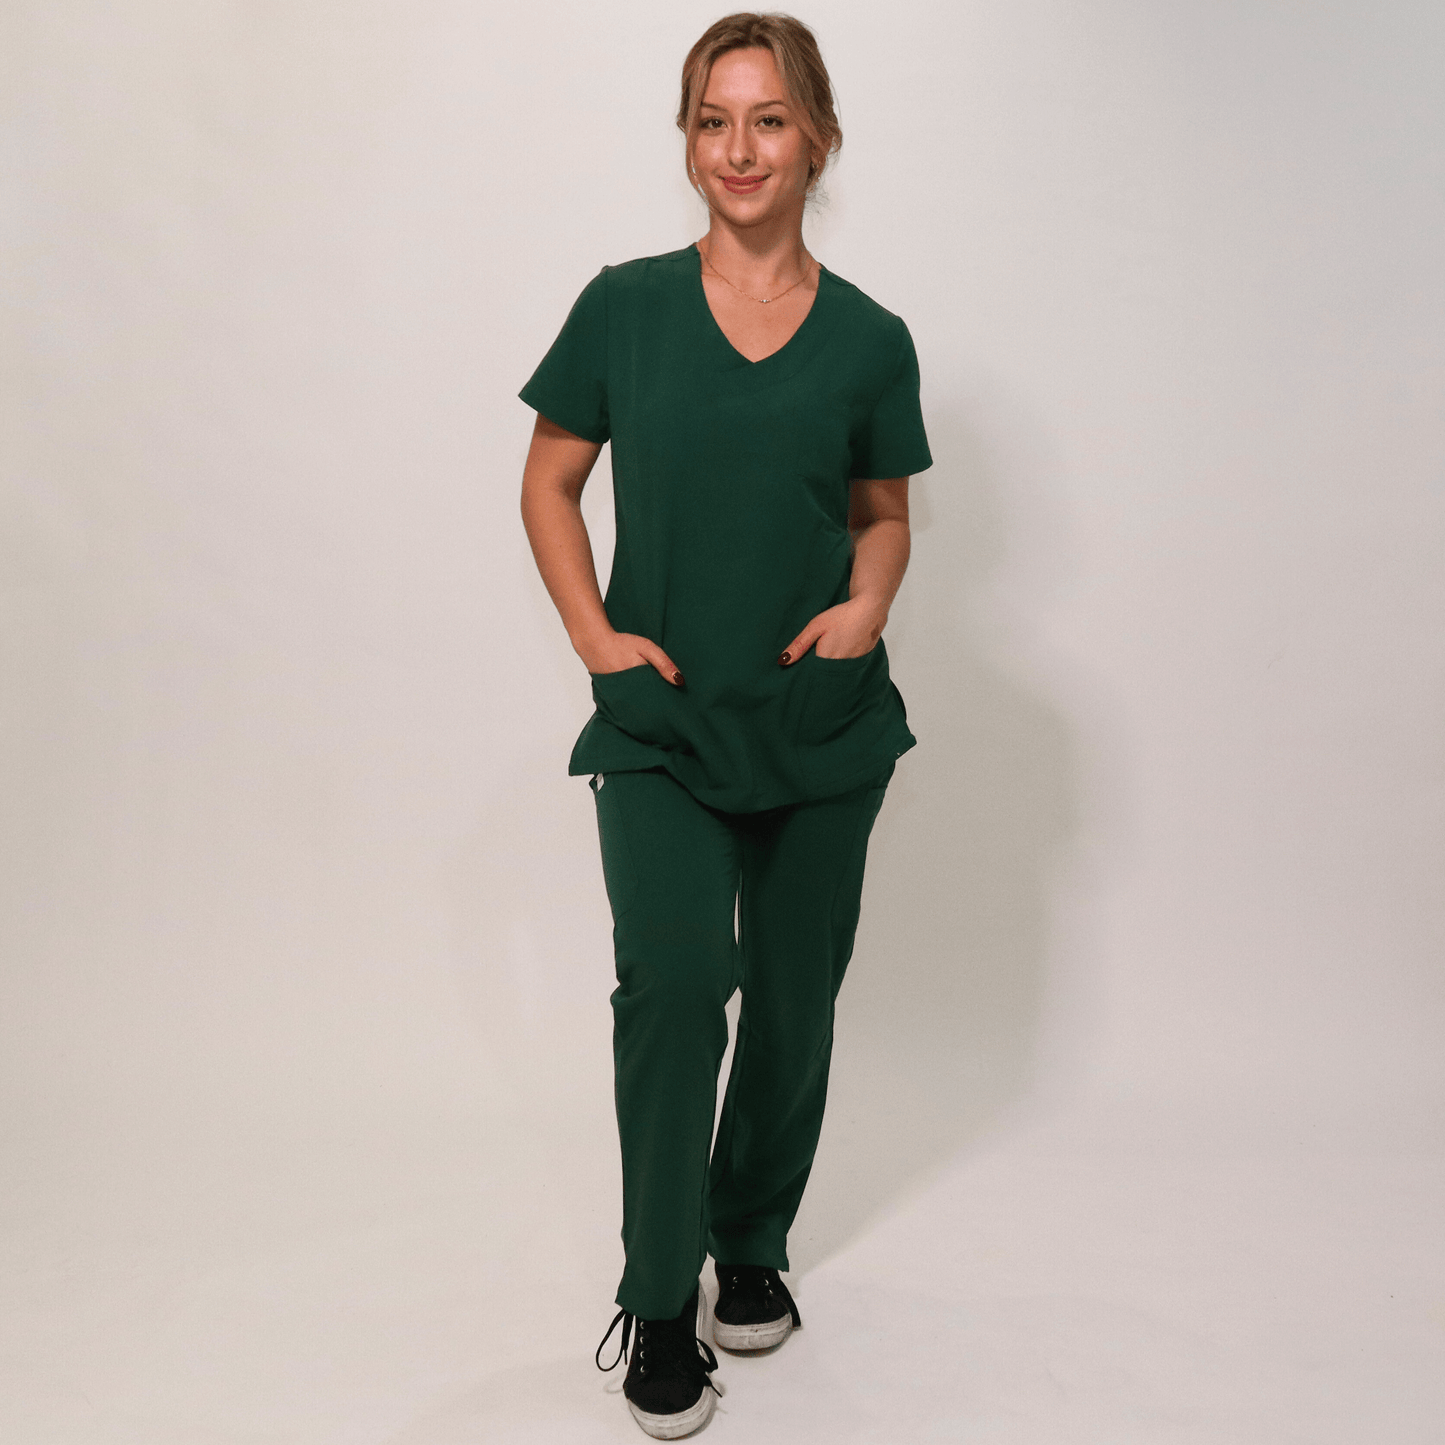 Women's Signature Hunter Green Medical Scrub Top